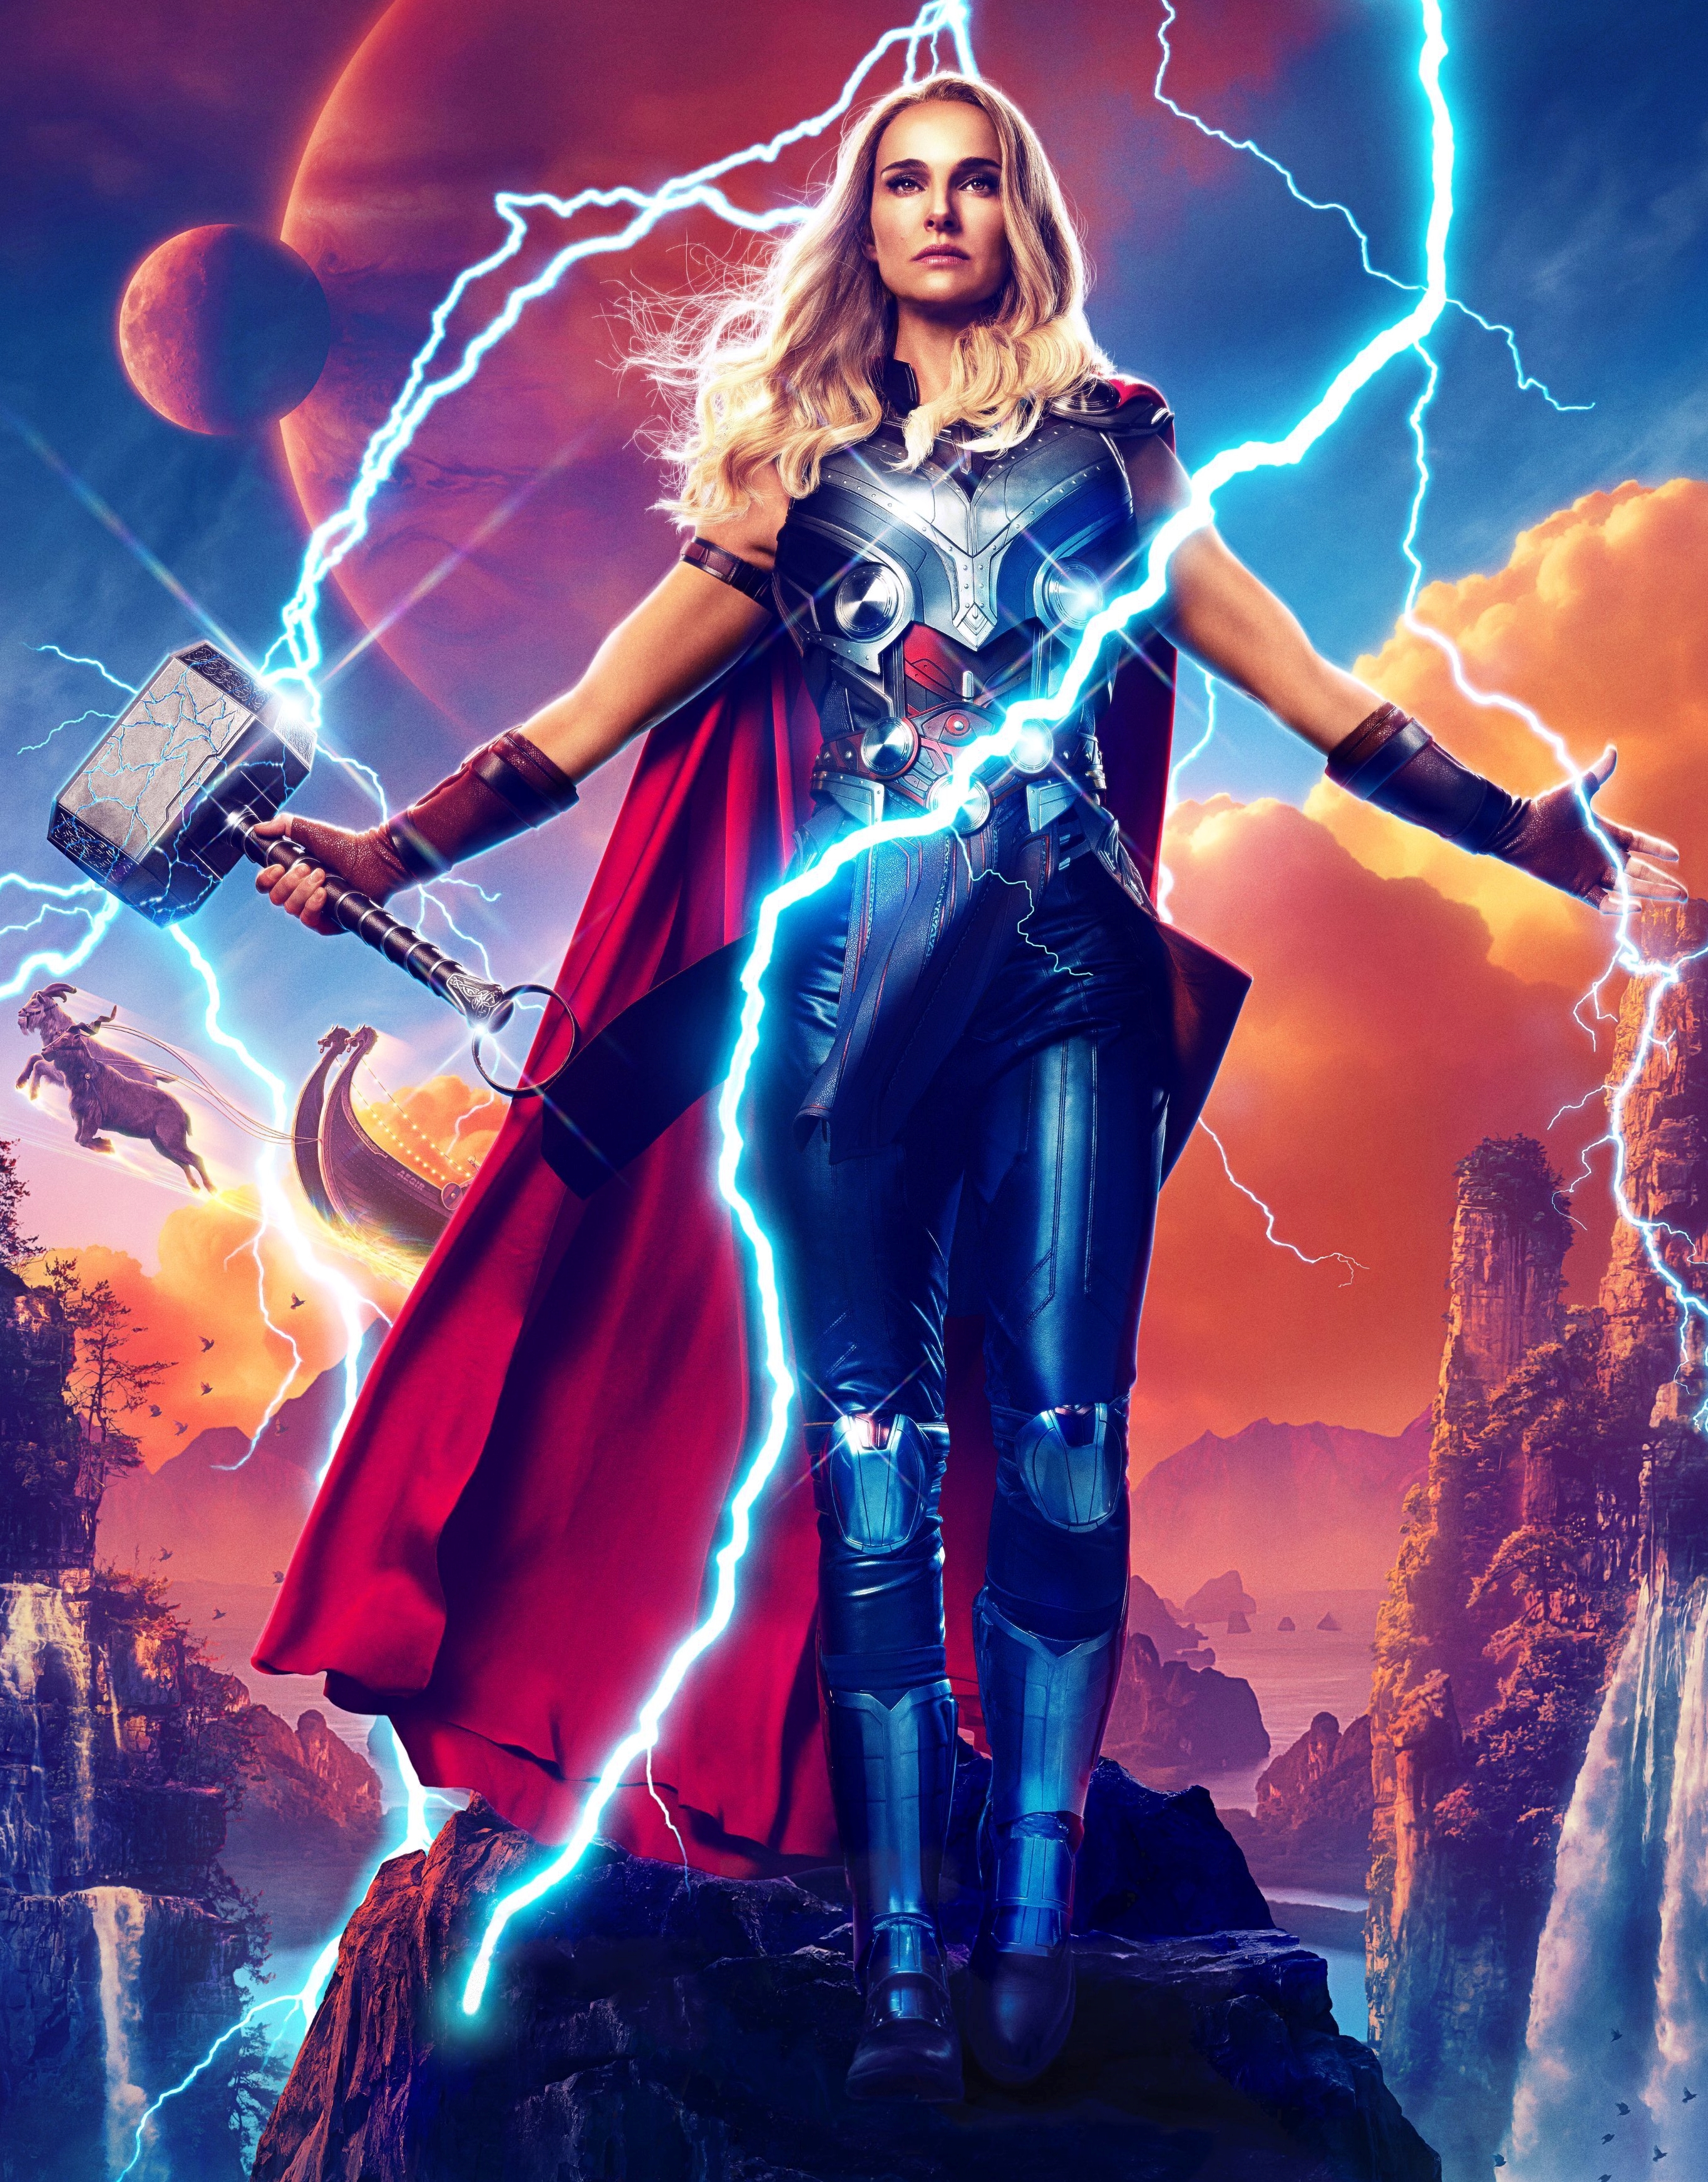 Thor: Ragnarok and more merry Marvel content lands online - CNET